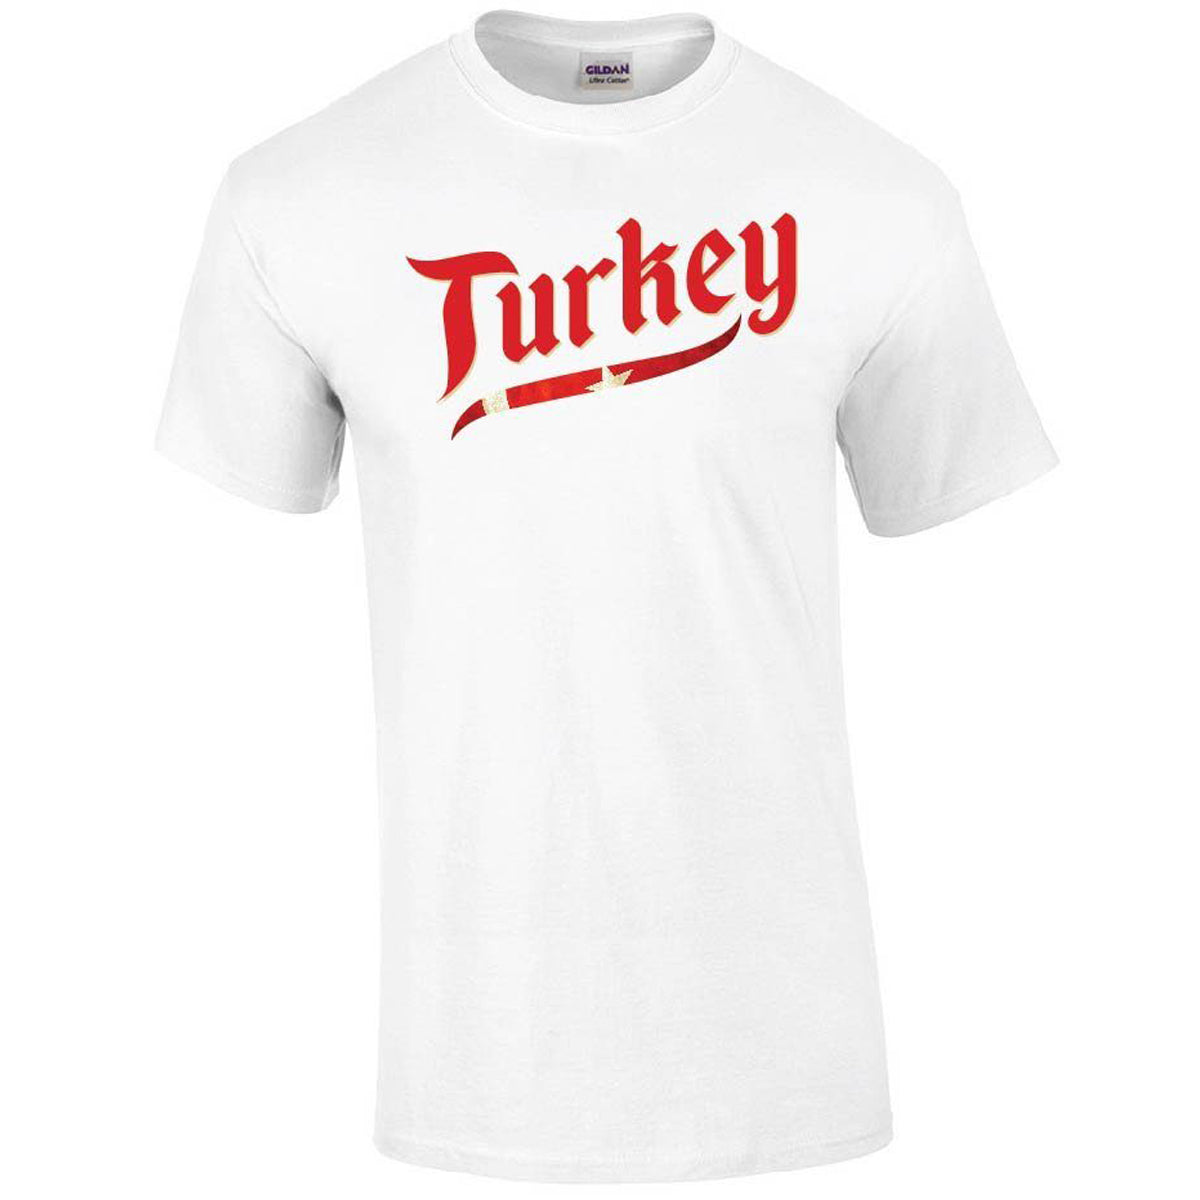 Turkey Script Euro 2016 Printed Tee T-shirts 411 Youth Medium White Youth